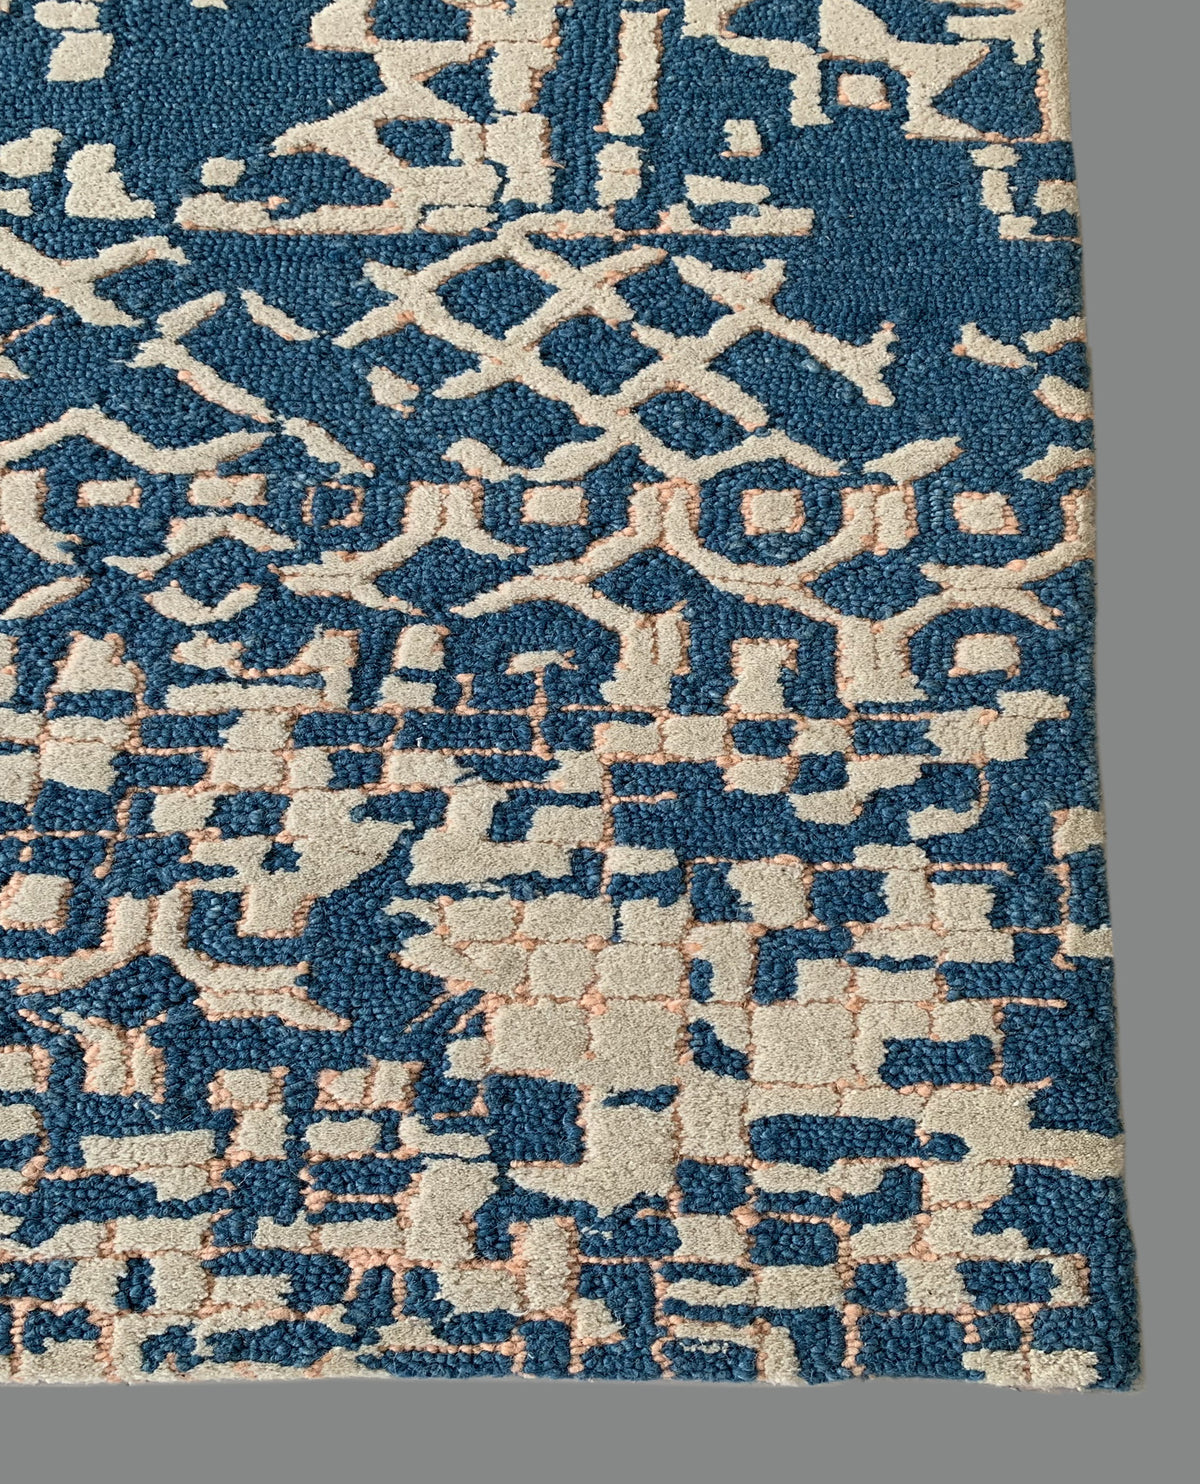 Rugslane Blue & White Color Modern Design 100% New Zealand Wool Handmade Carpet 5ft x 8ft